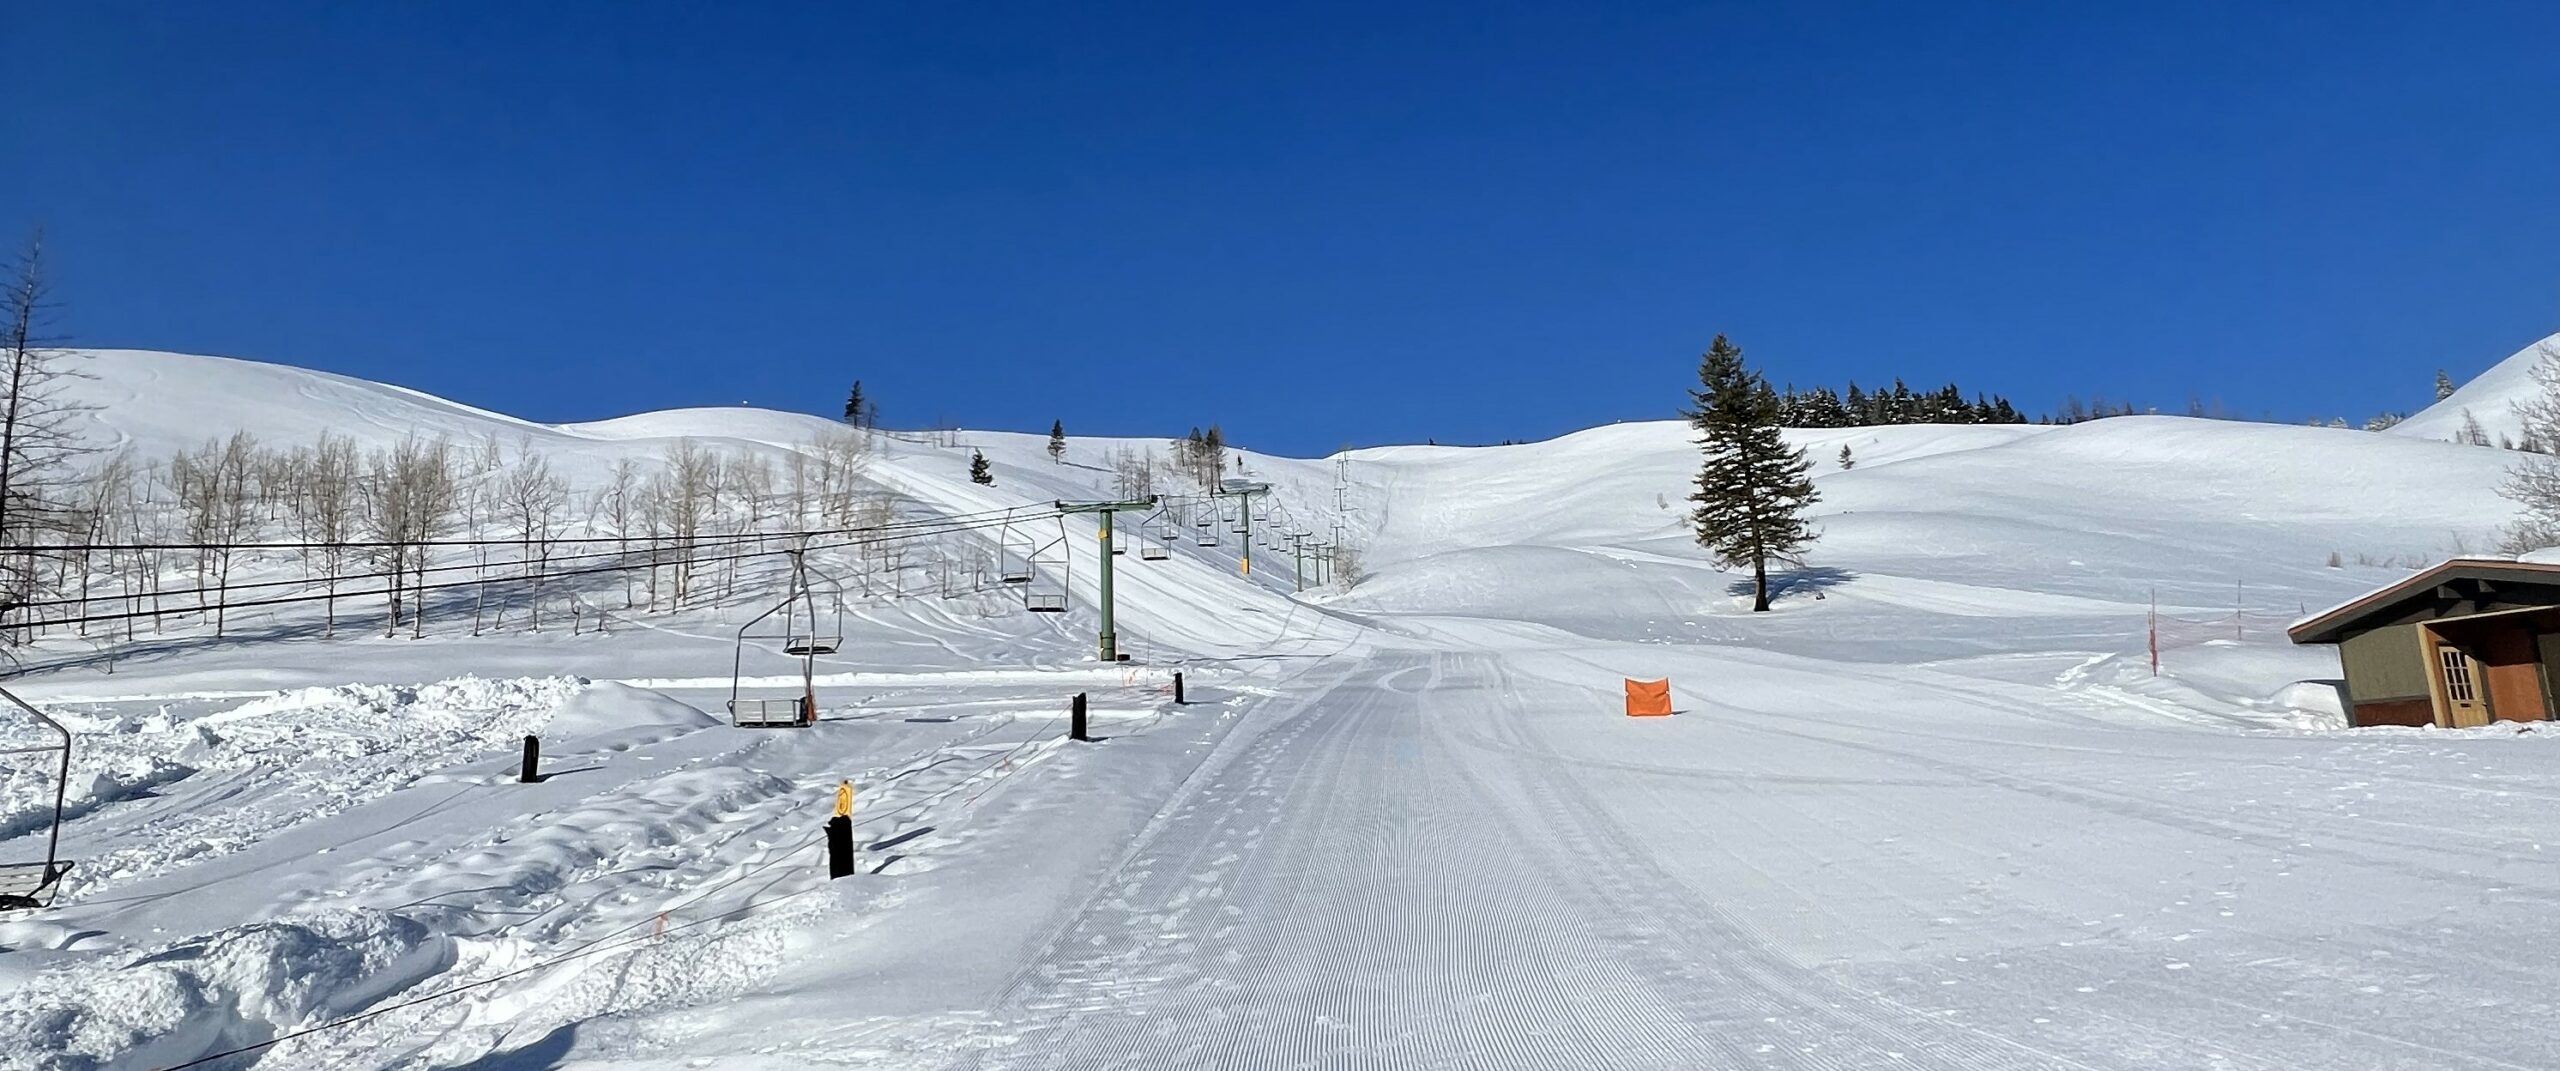 Photo: Soldier Mountain Ski Resort in Fairfield. Photo by Chris McFarlane.